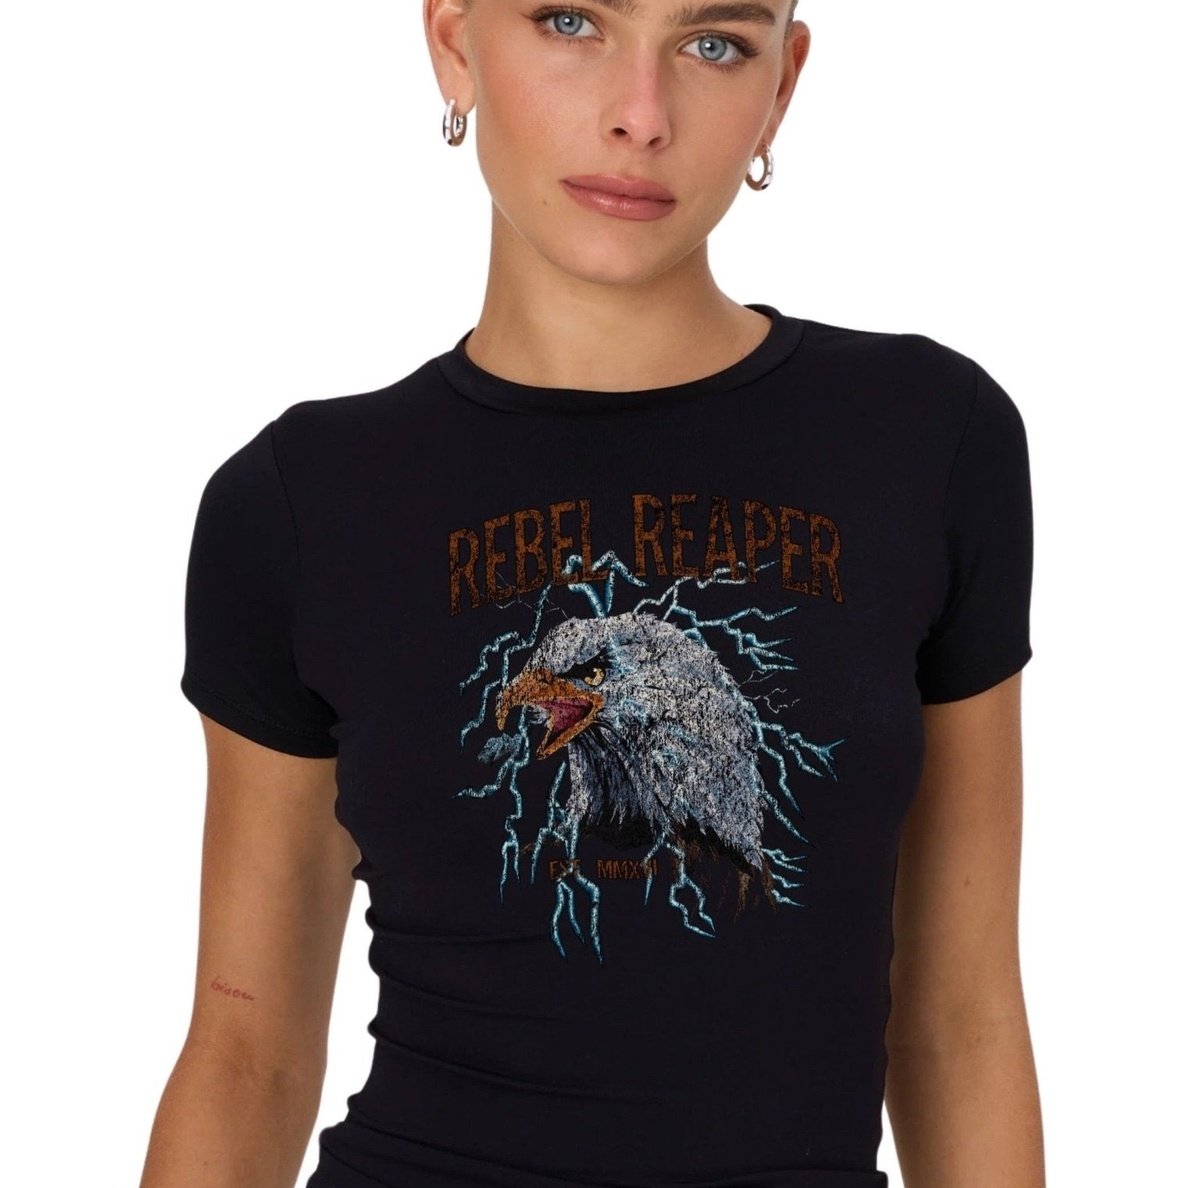 Women's Black Vintage Eagle Baby Tee - Rebel Reaper Clothing Company Women's Shirts